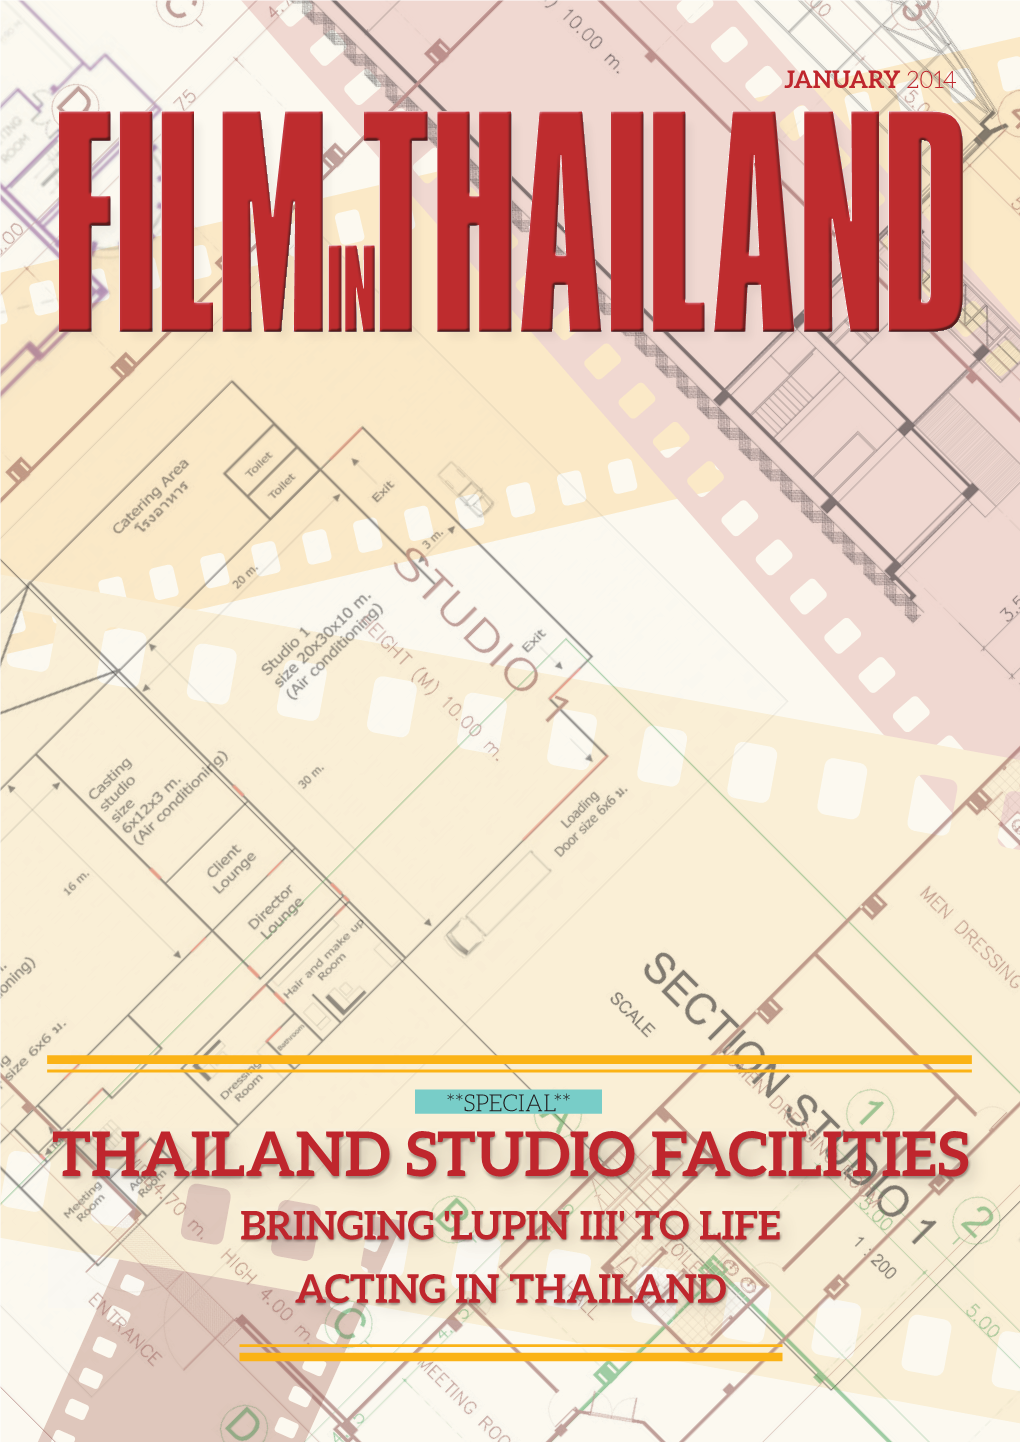 THAILAND STUDIO FACILITIES BRINGING 'LUPIN III' to LIFE ACTING in THAILAND Film in Thailand / January 2014 2 RECENT PRODUCTIONS PRODUCTIONS RECENT Tel